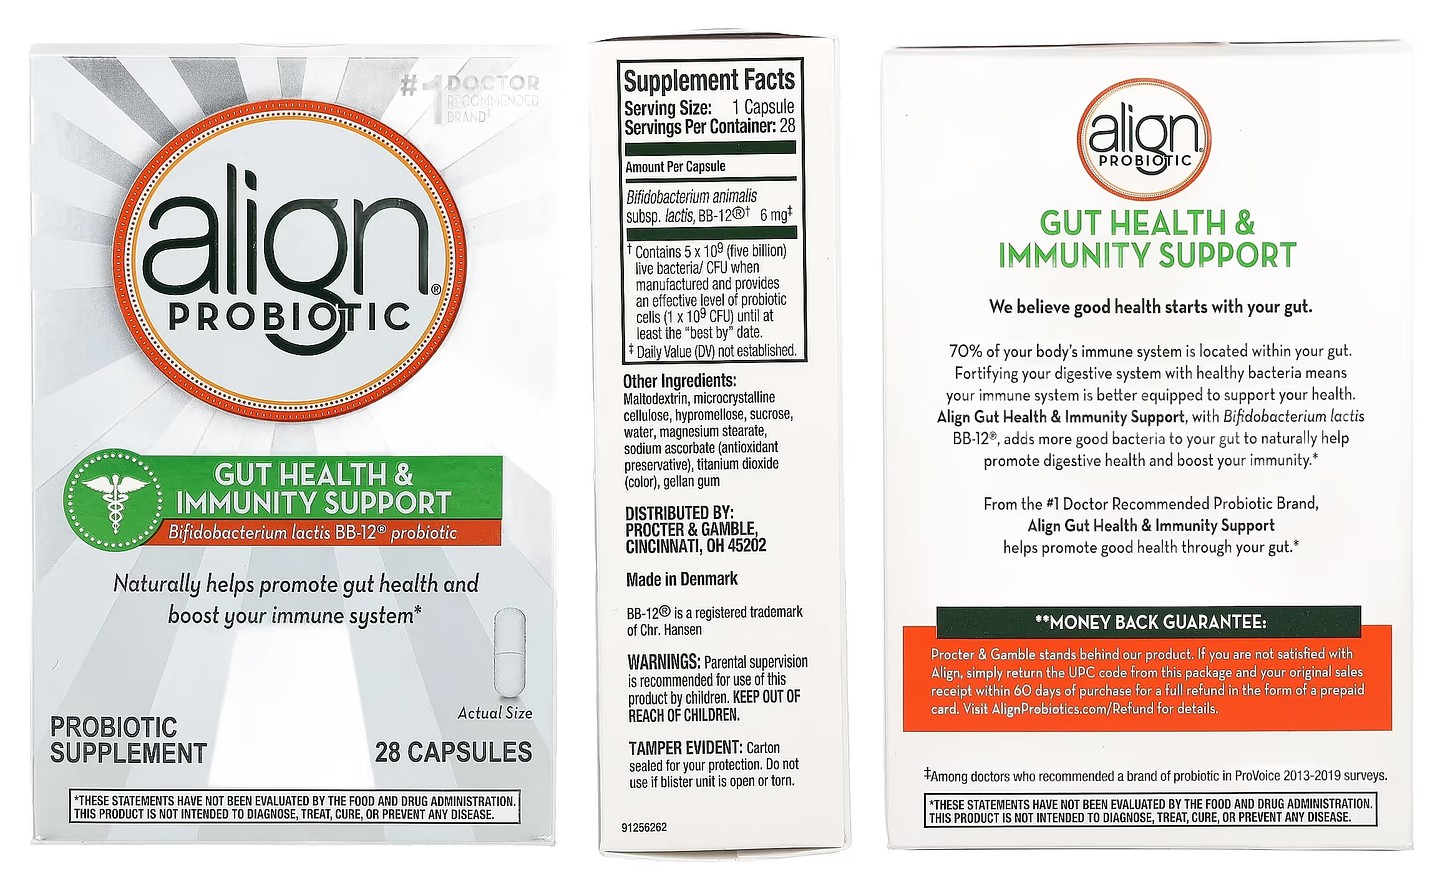 Align Probiotics, Gut Health & Immunity Support packaging